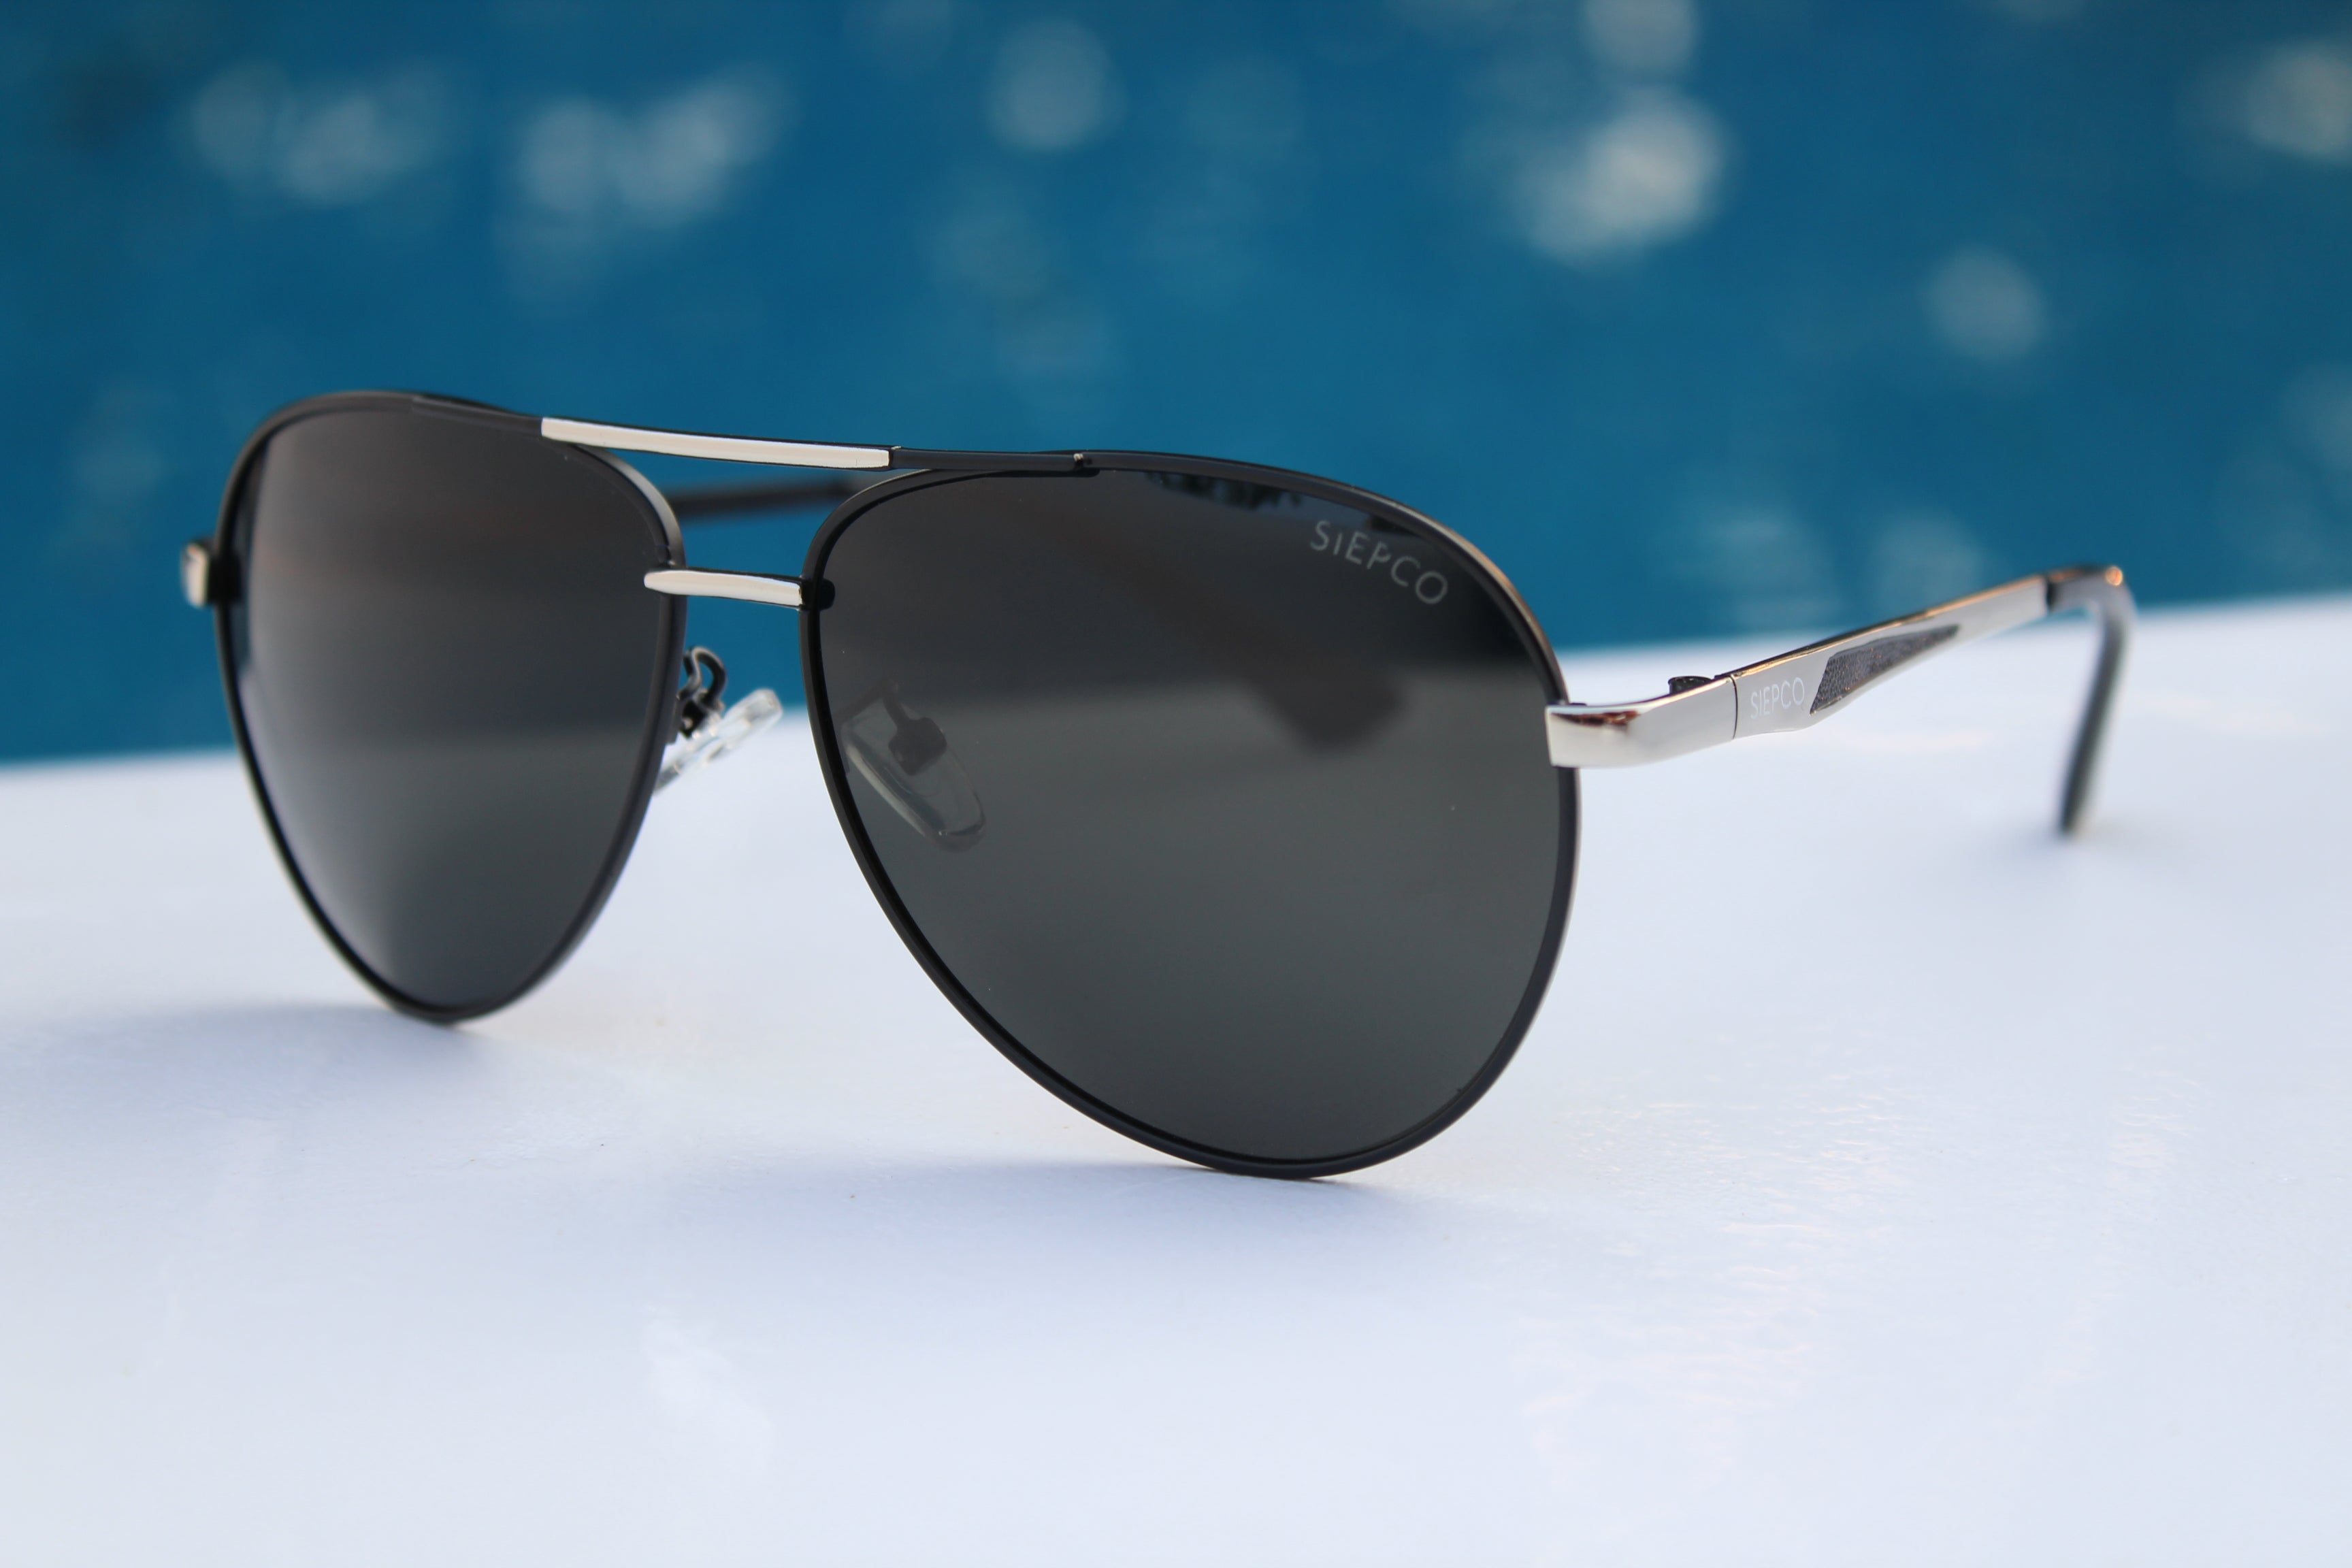 Top Gun Style Aviator Sunglasses for Sale Canada - Mavericks – SIEPCO